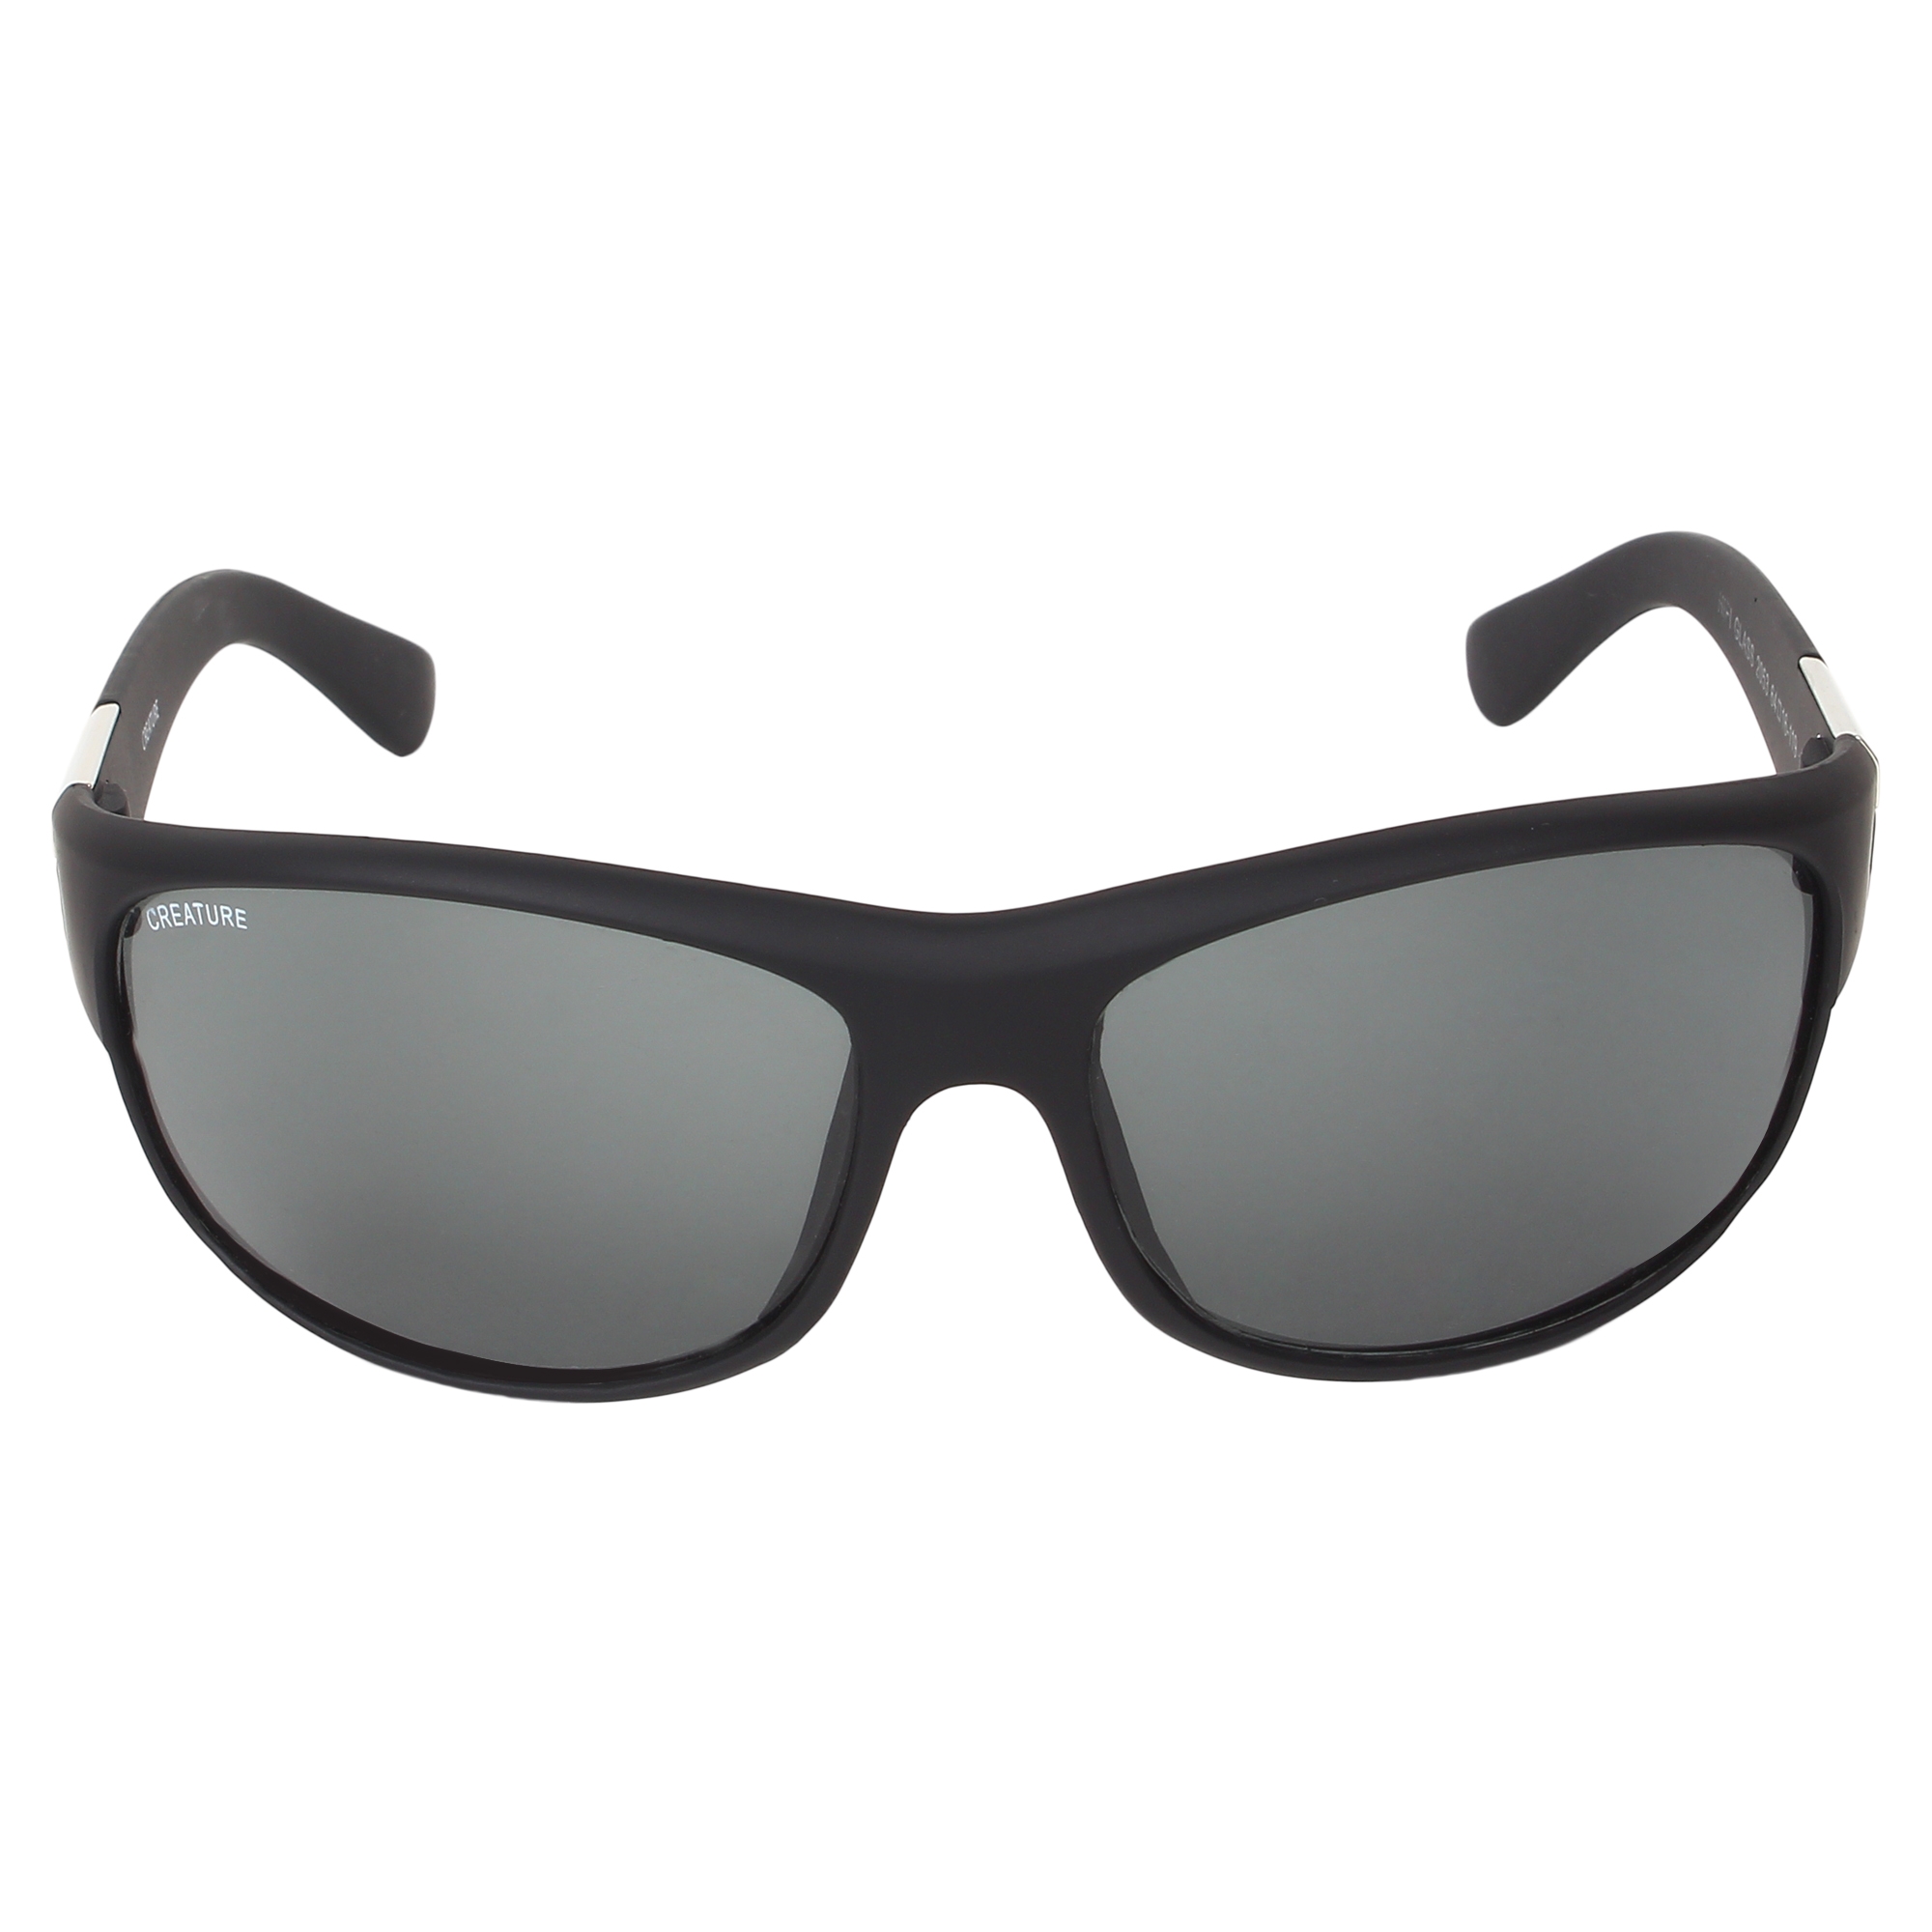 CREATURE | CREATURE Black Matte Finish Wrap-Around Sunglasses For Men